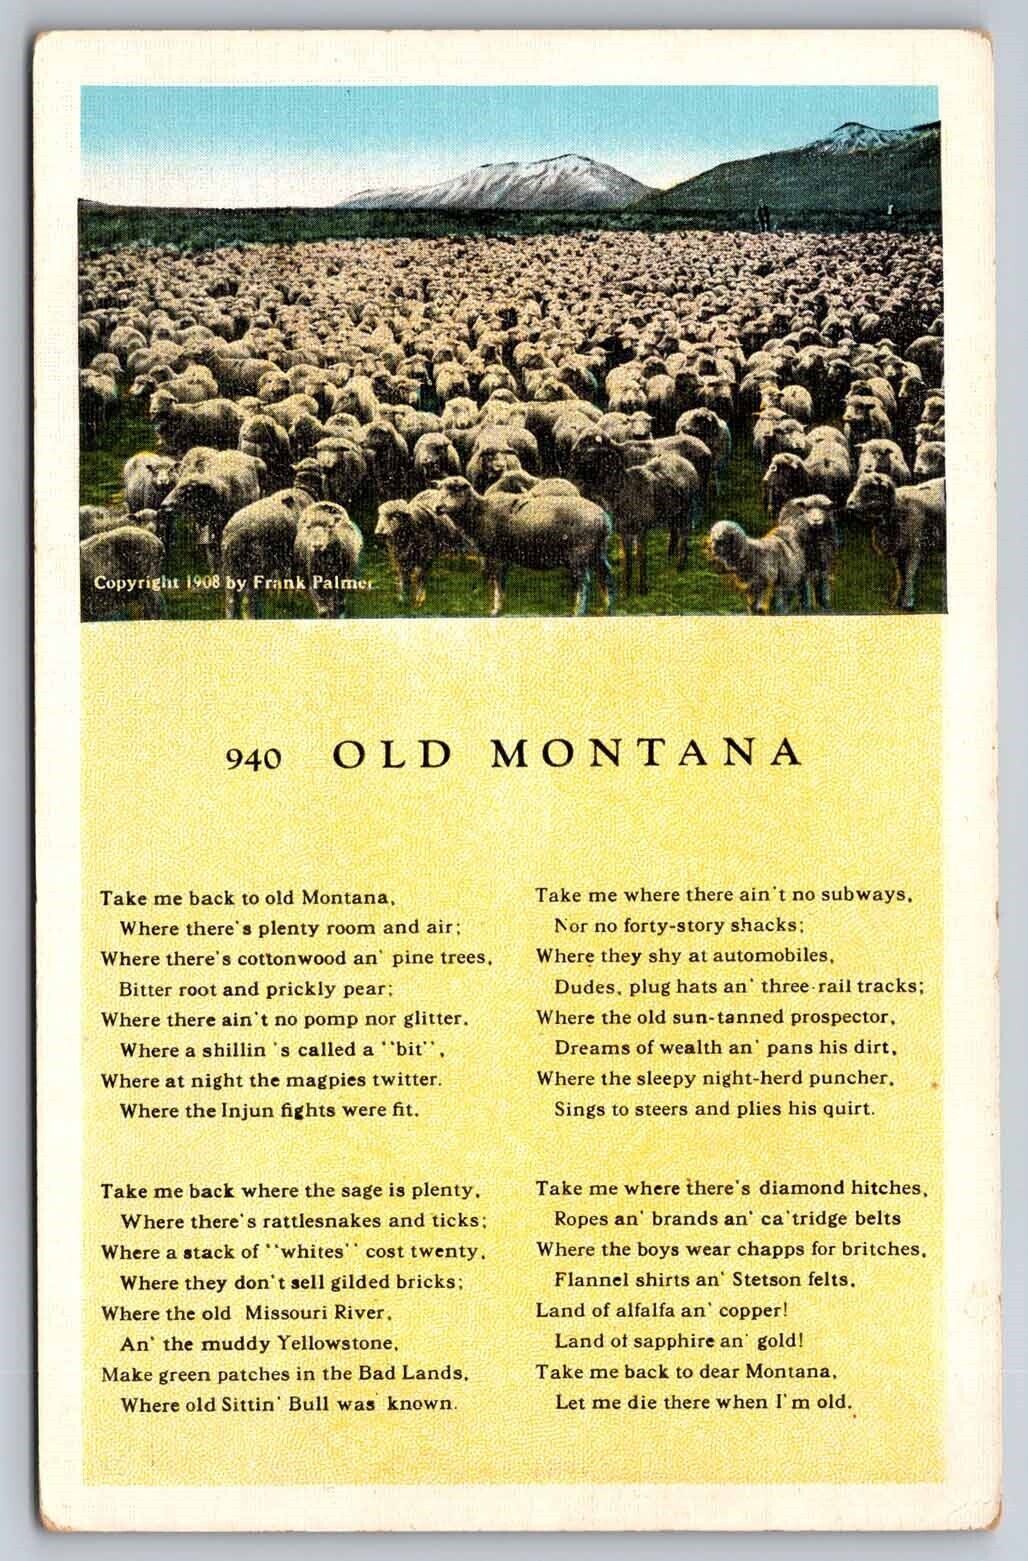 eStampsNet - Postcard Old Montana Photo of Sheep and Poem